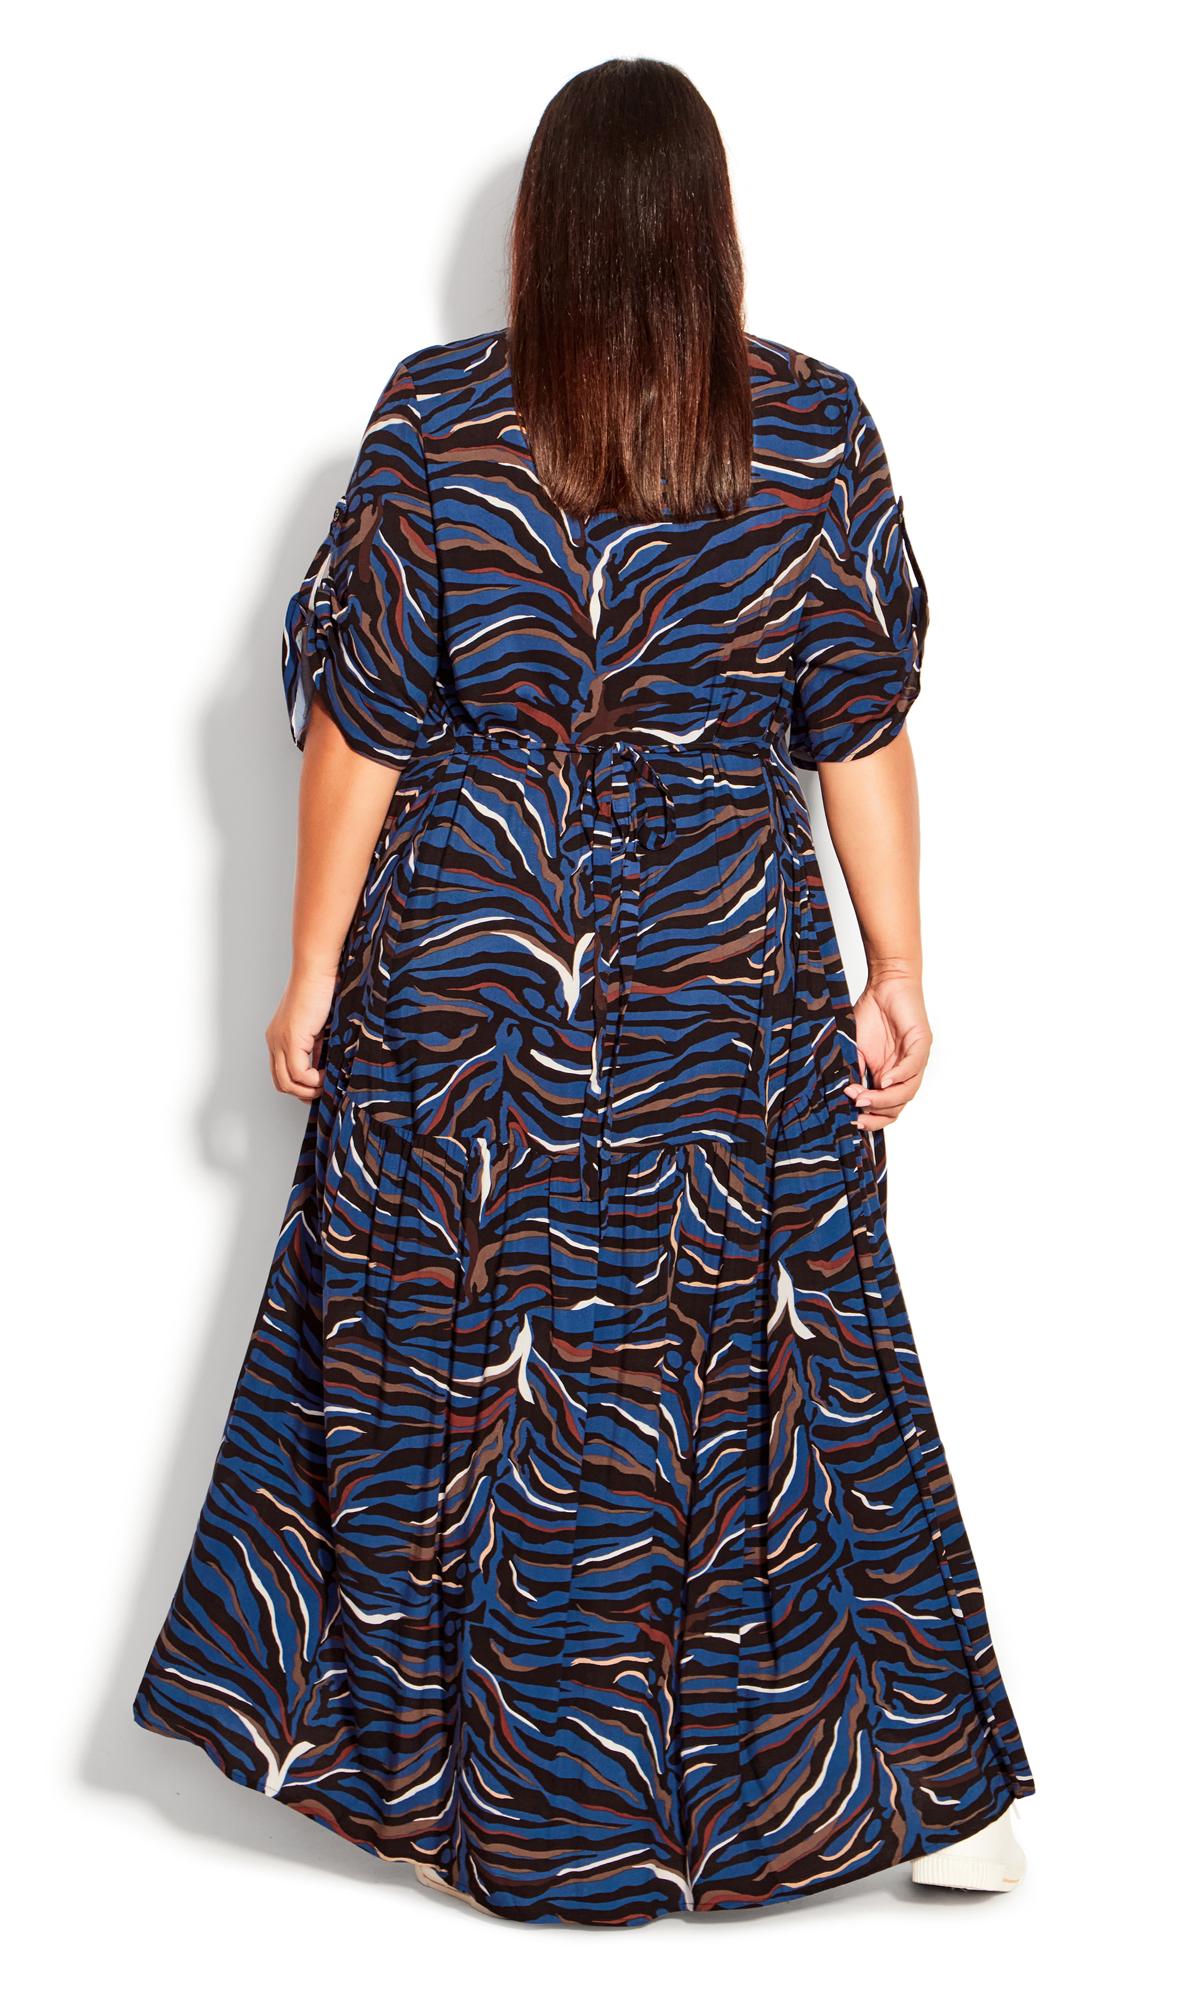 Val Print Blue Zebra Dress 2